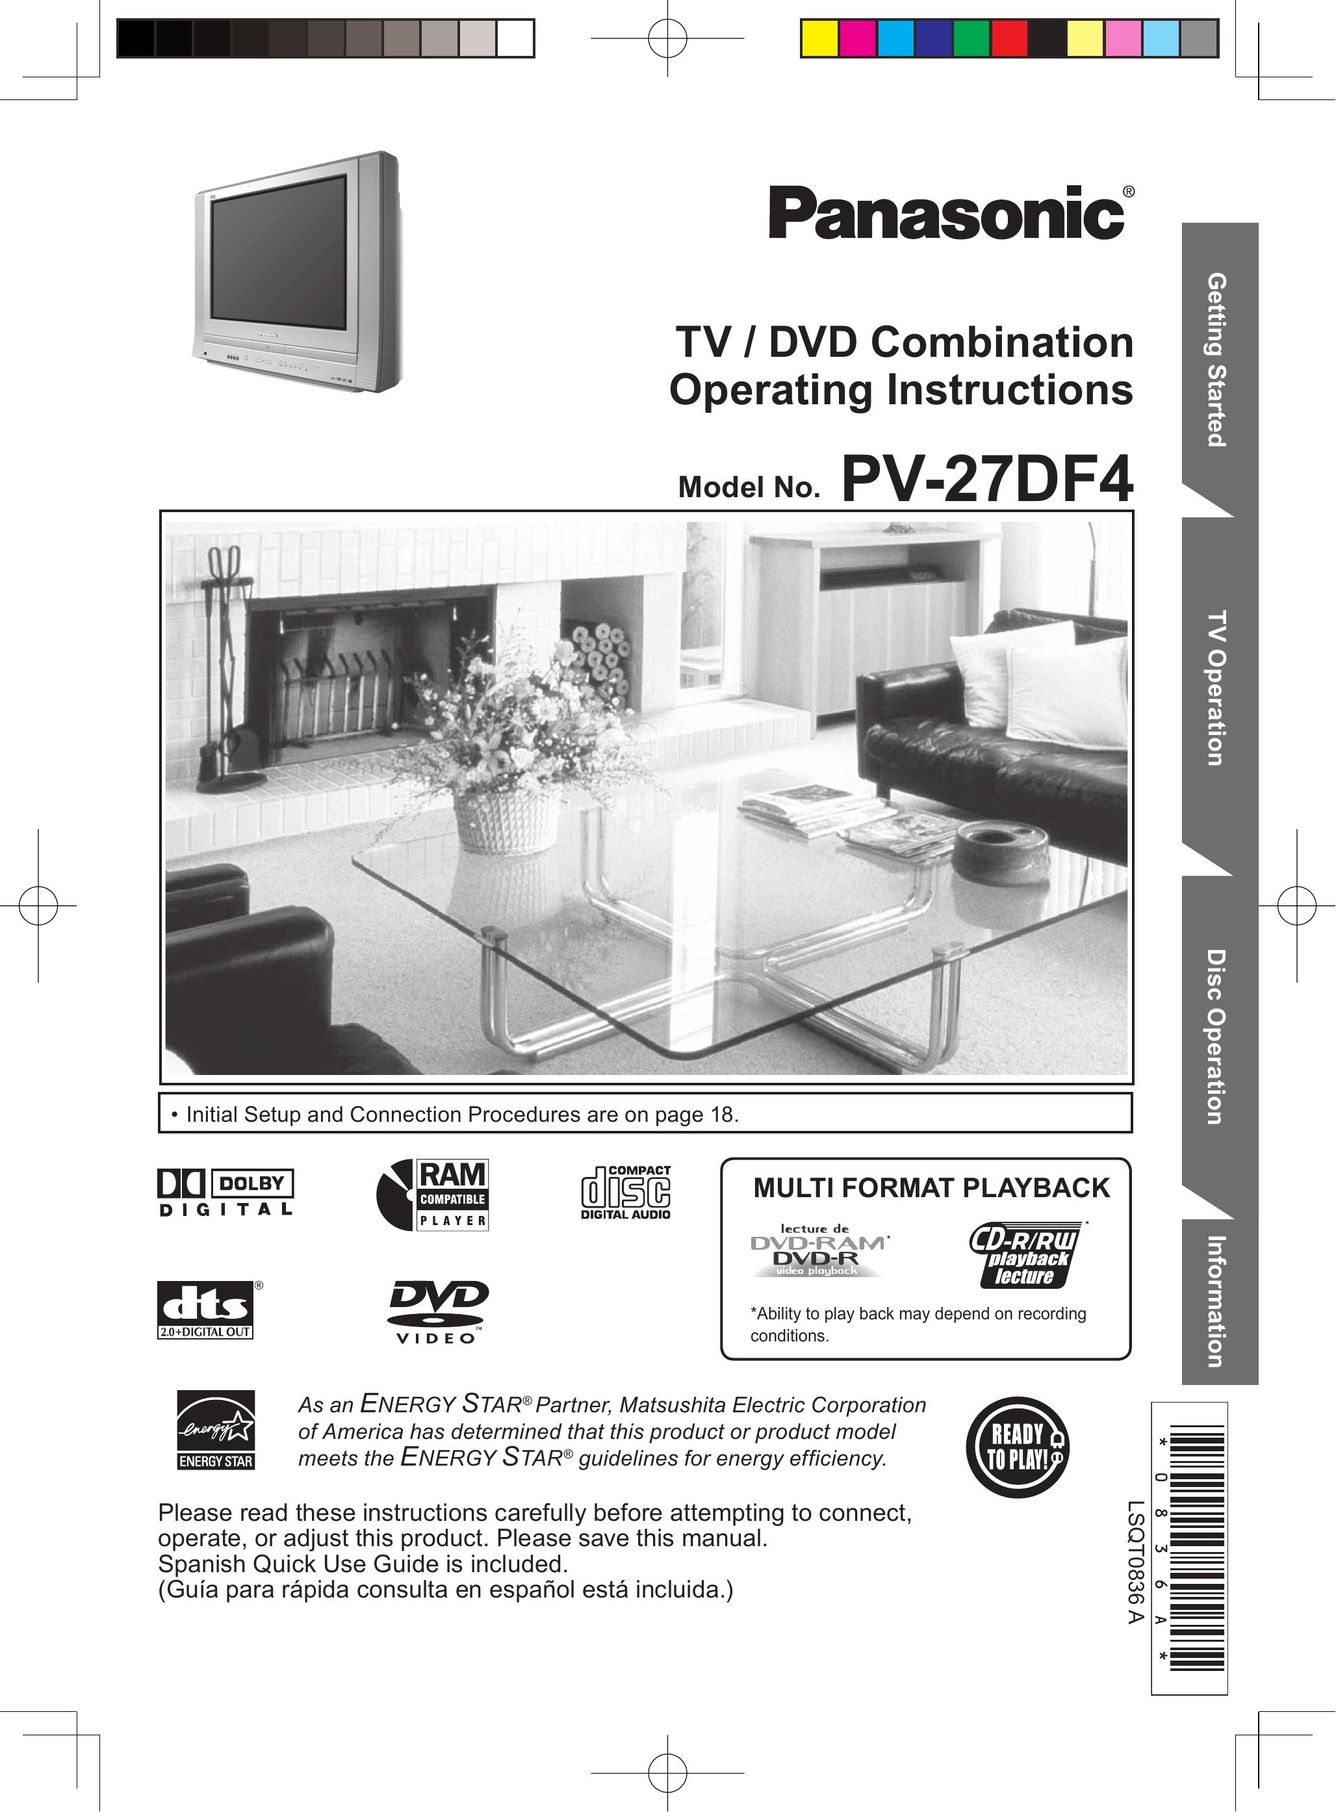 Panasonic PV-27DF4 TV DVD Combo User Manual